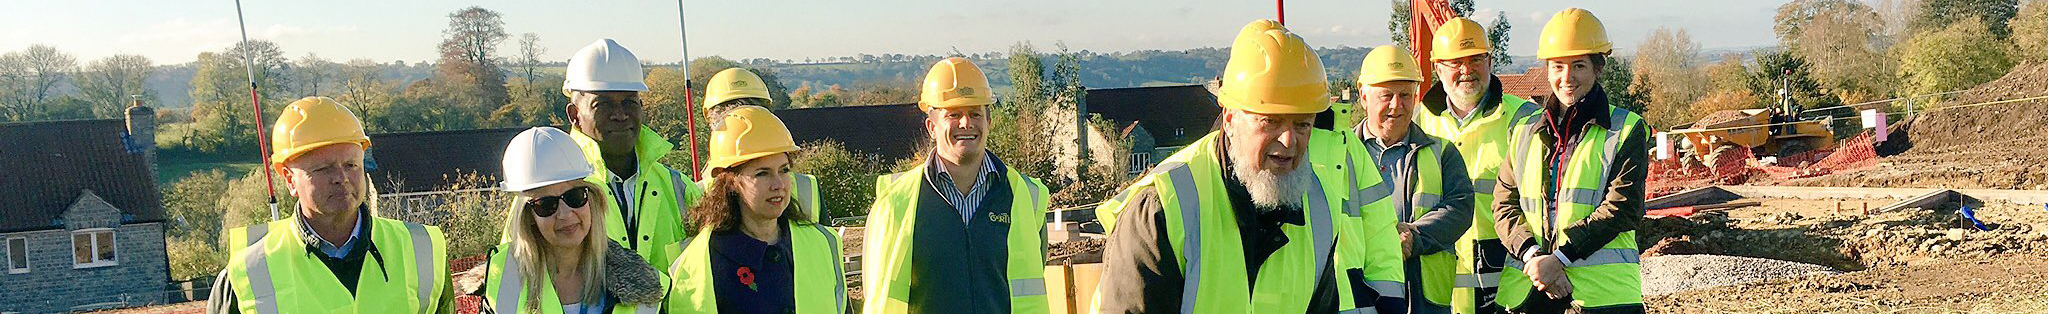 Michael Eavis, Glastonbury Festival's founder at new building site.